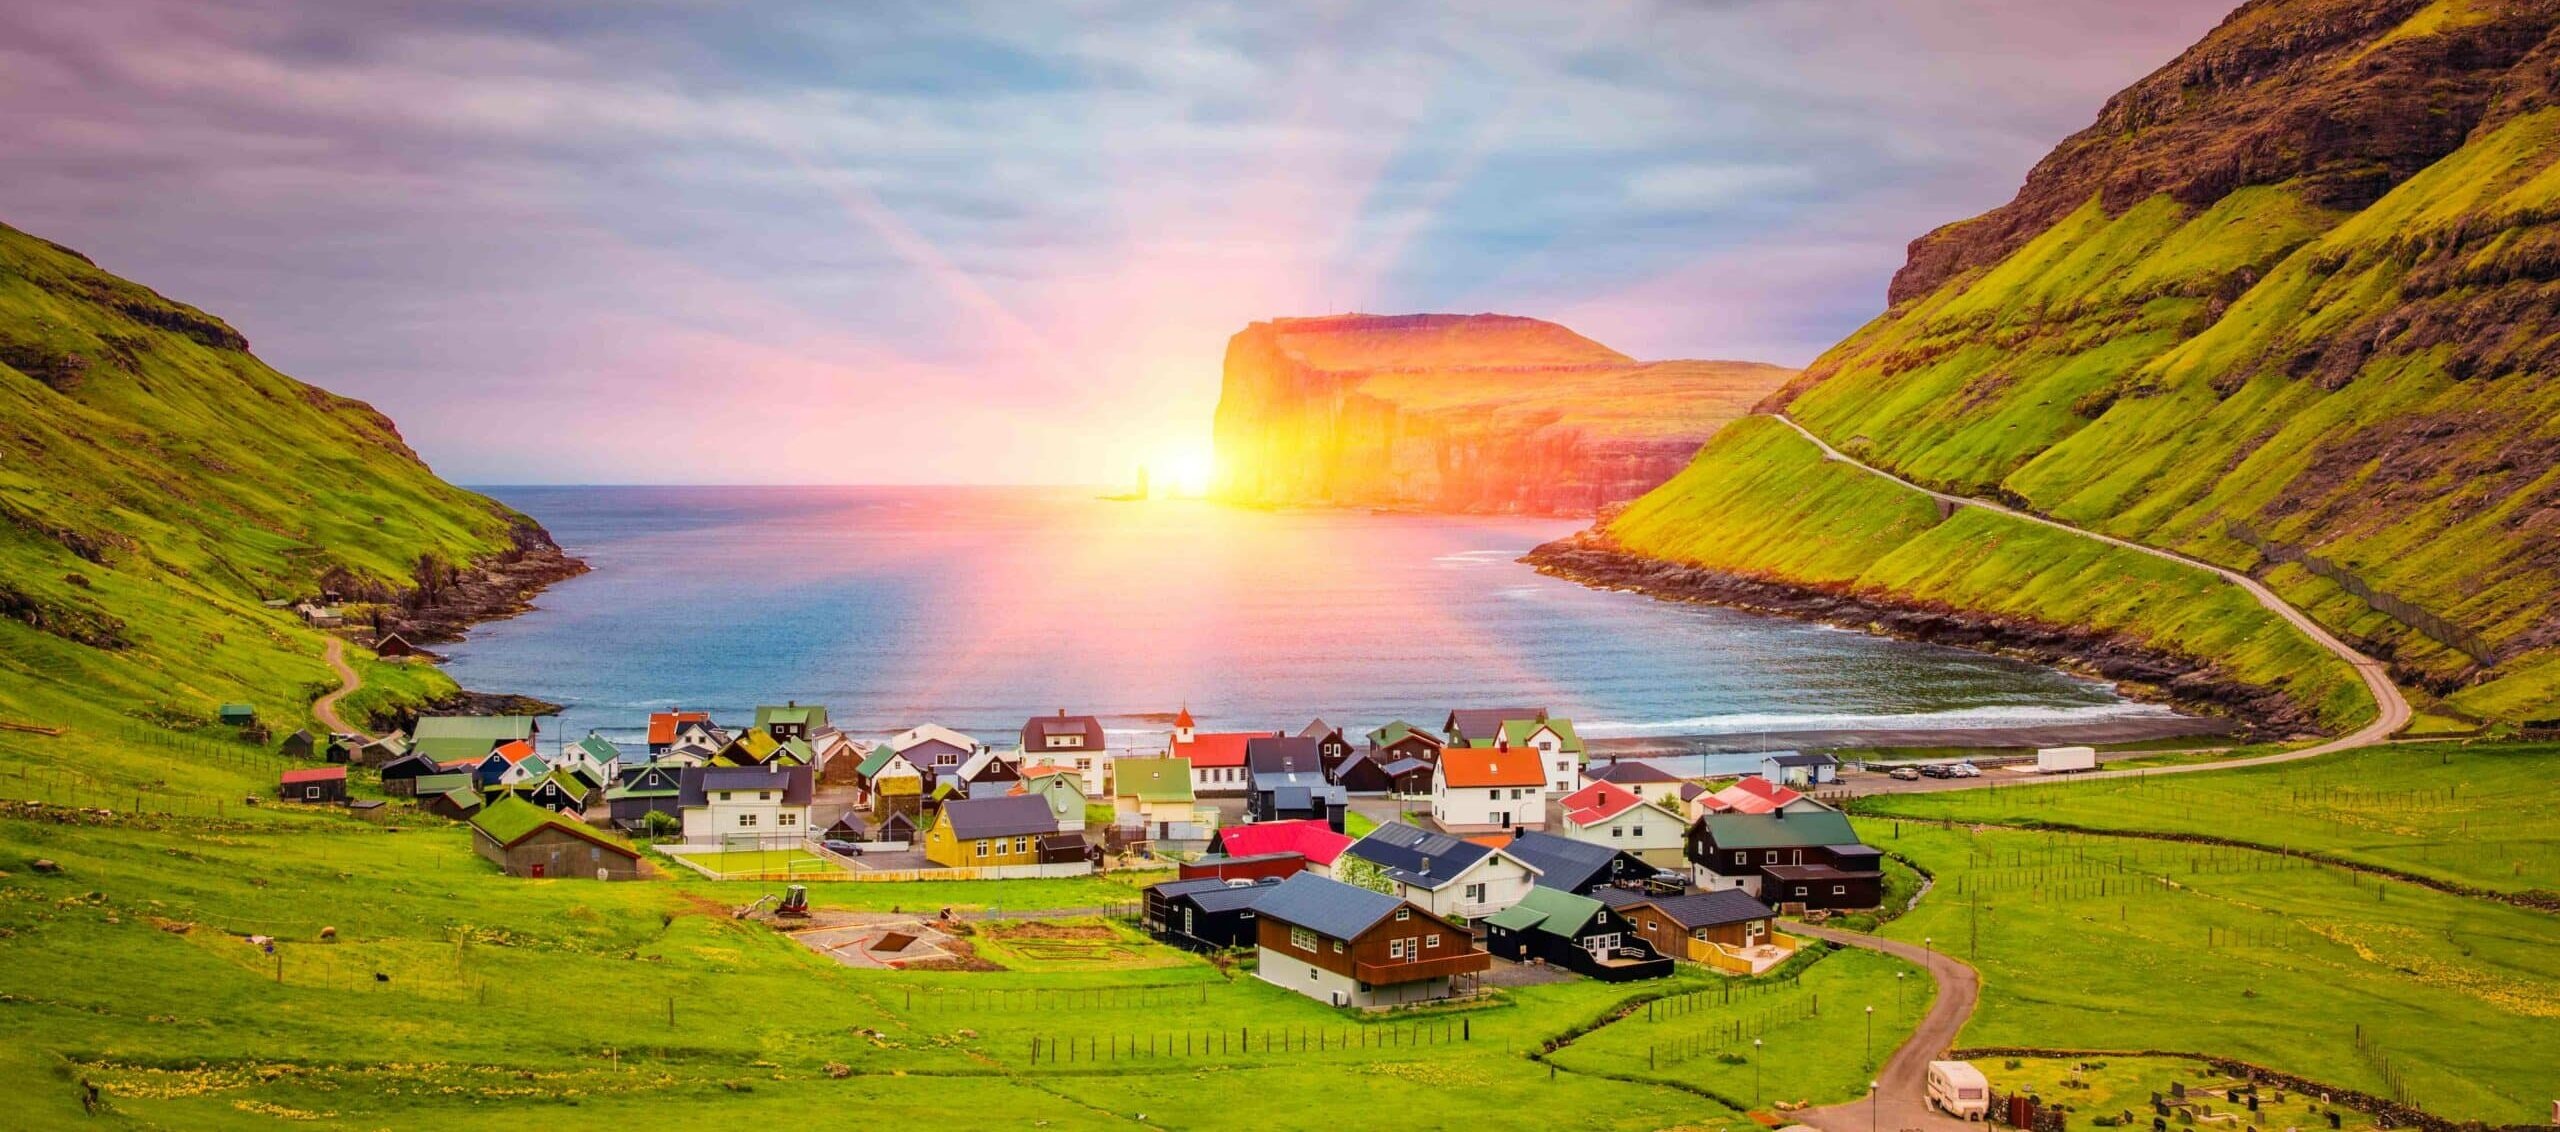 Faroe Islands in August, Unbeatable guide, Off-the-beaten-track, Cultural experiences, 2560x1140 Dual Screen Desktop